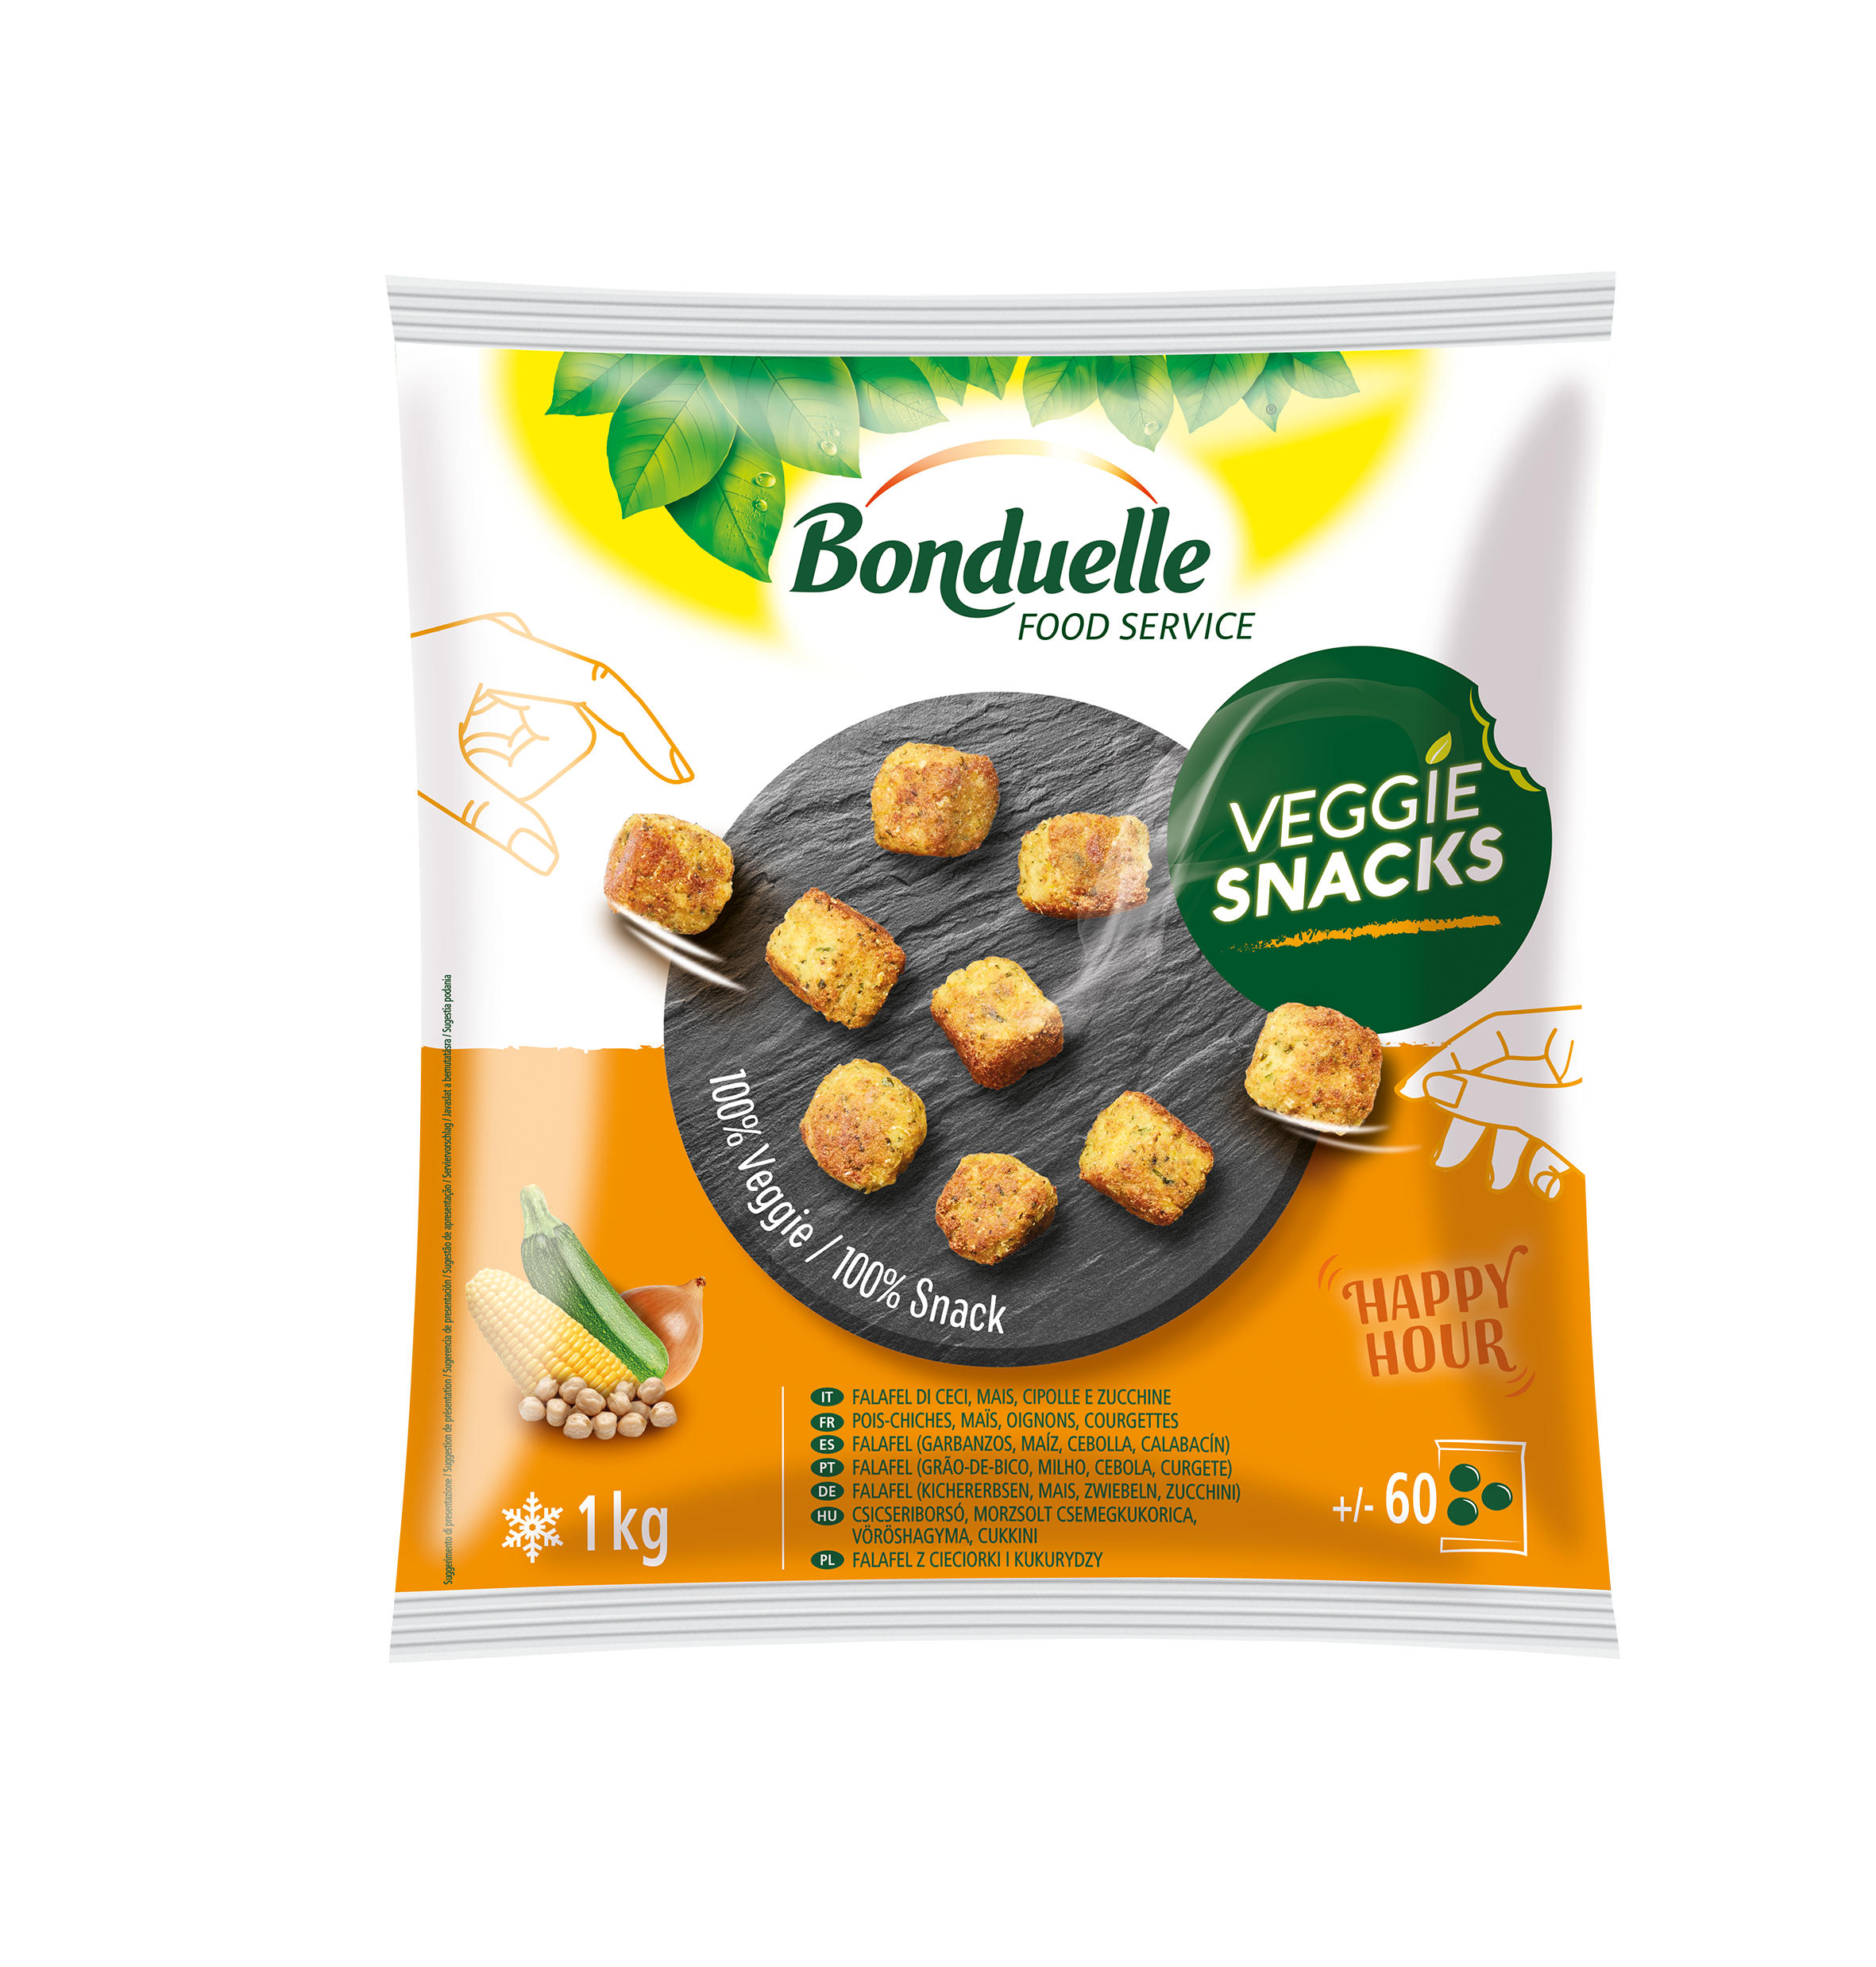 Nowe roślinne produkty od Bonduelle Food Service